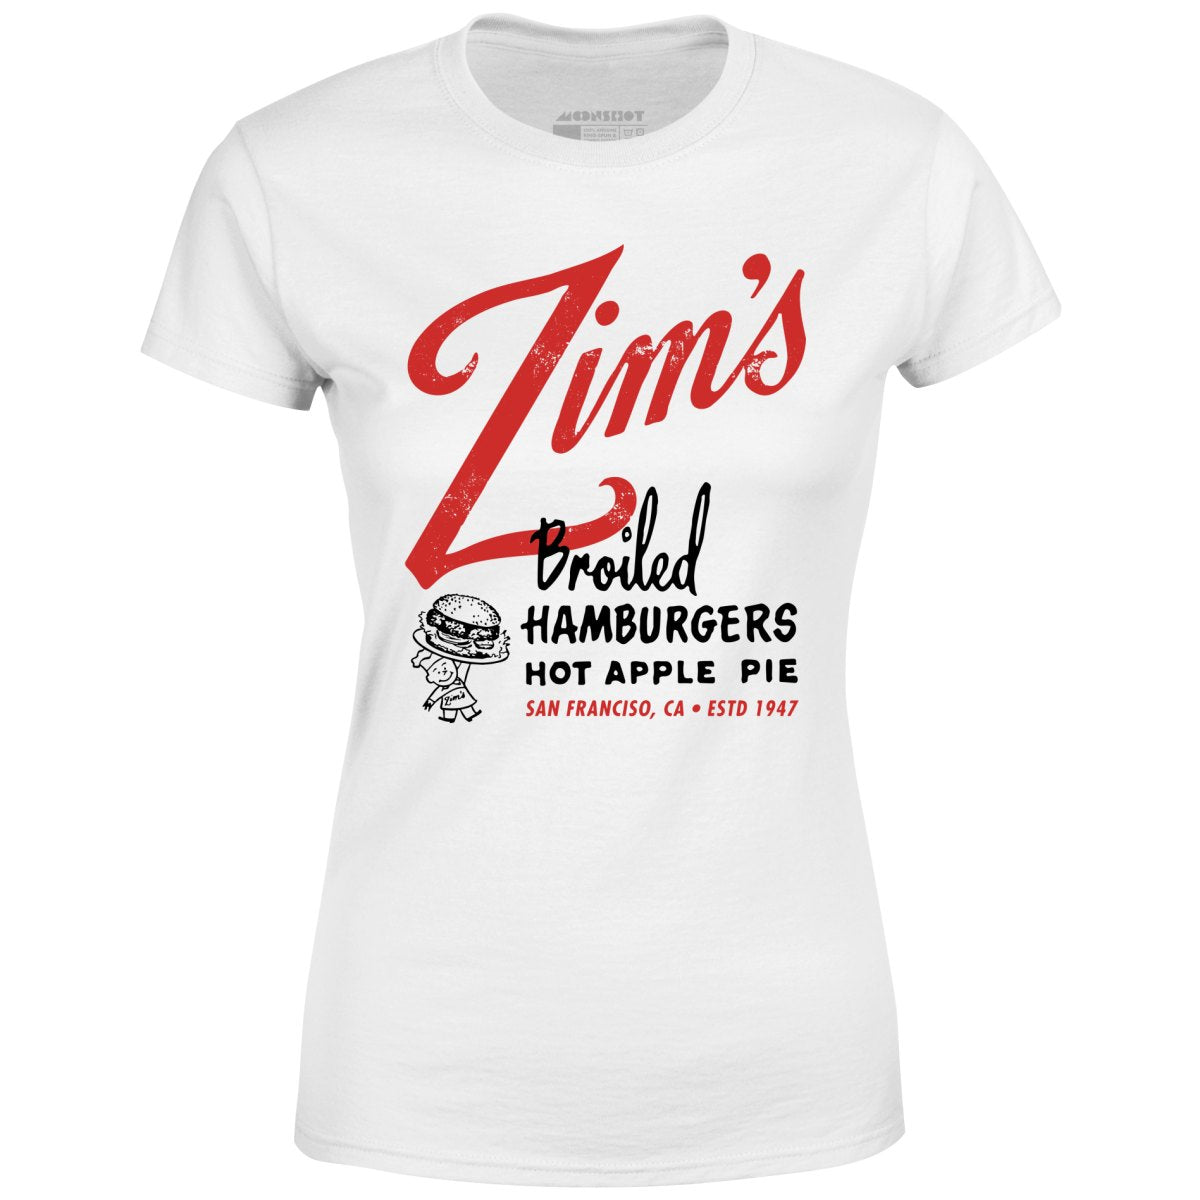 Zim's Hamburgers v1 - San Francisco, CA - Vintage Restaurant - Women's T-Shirt